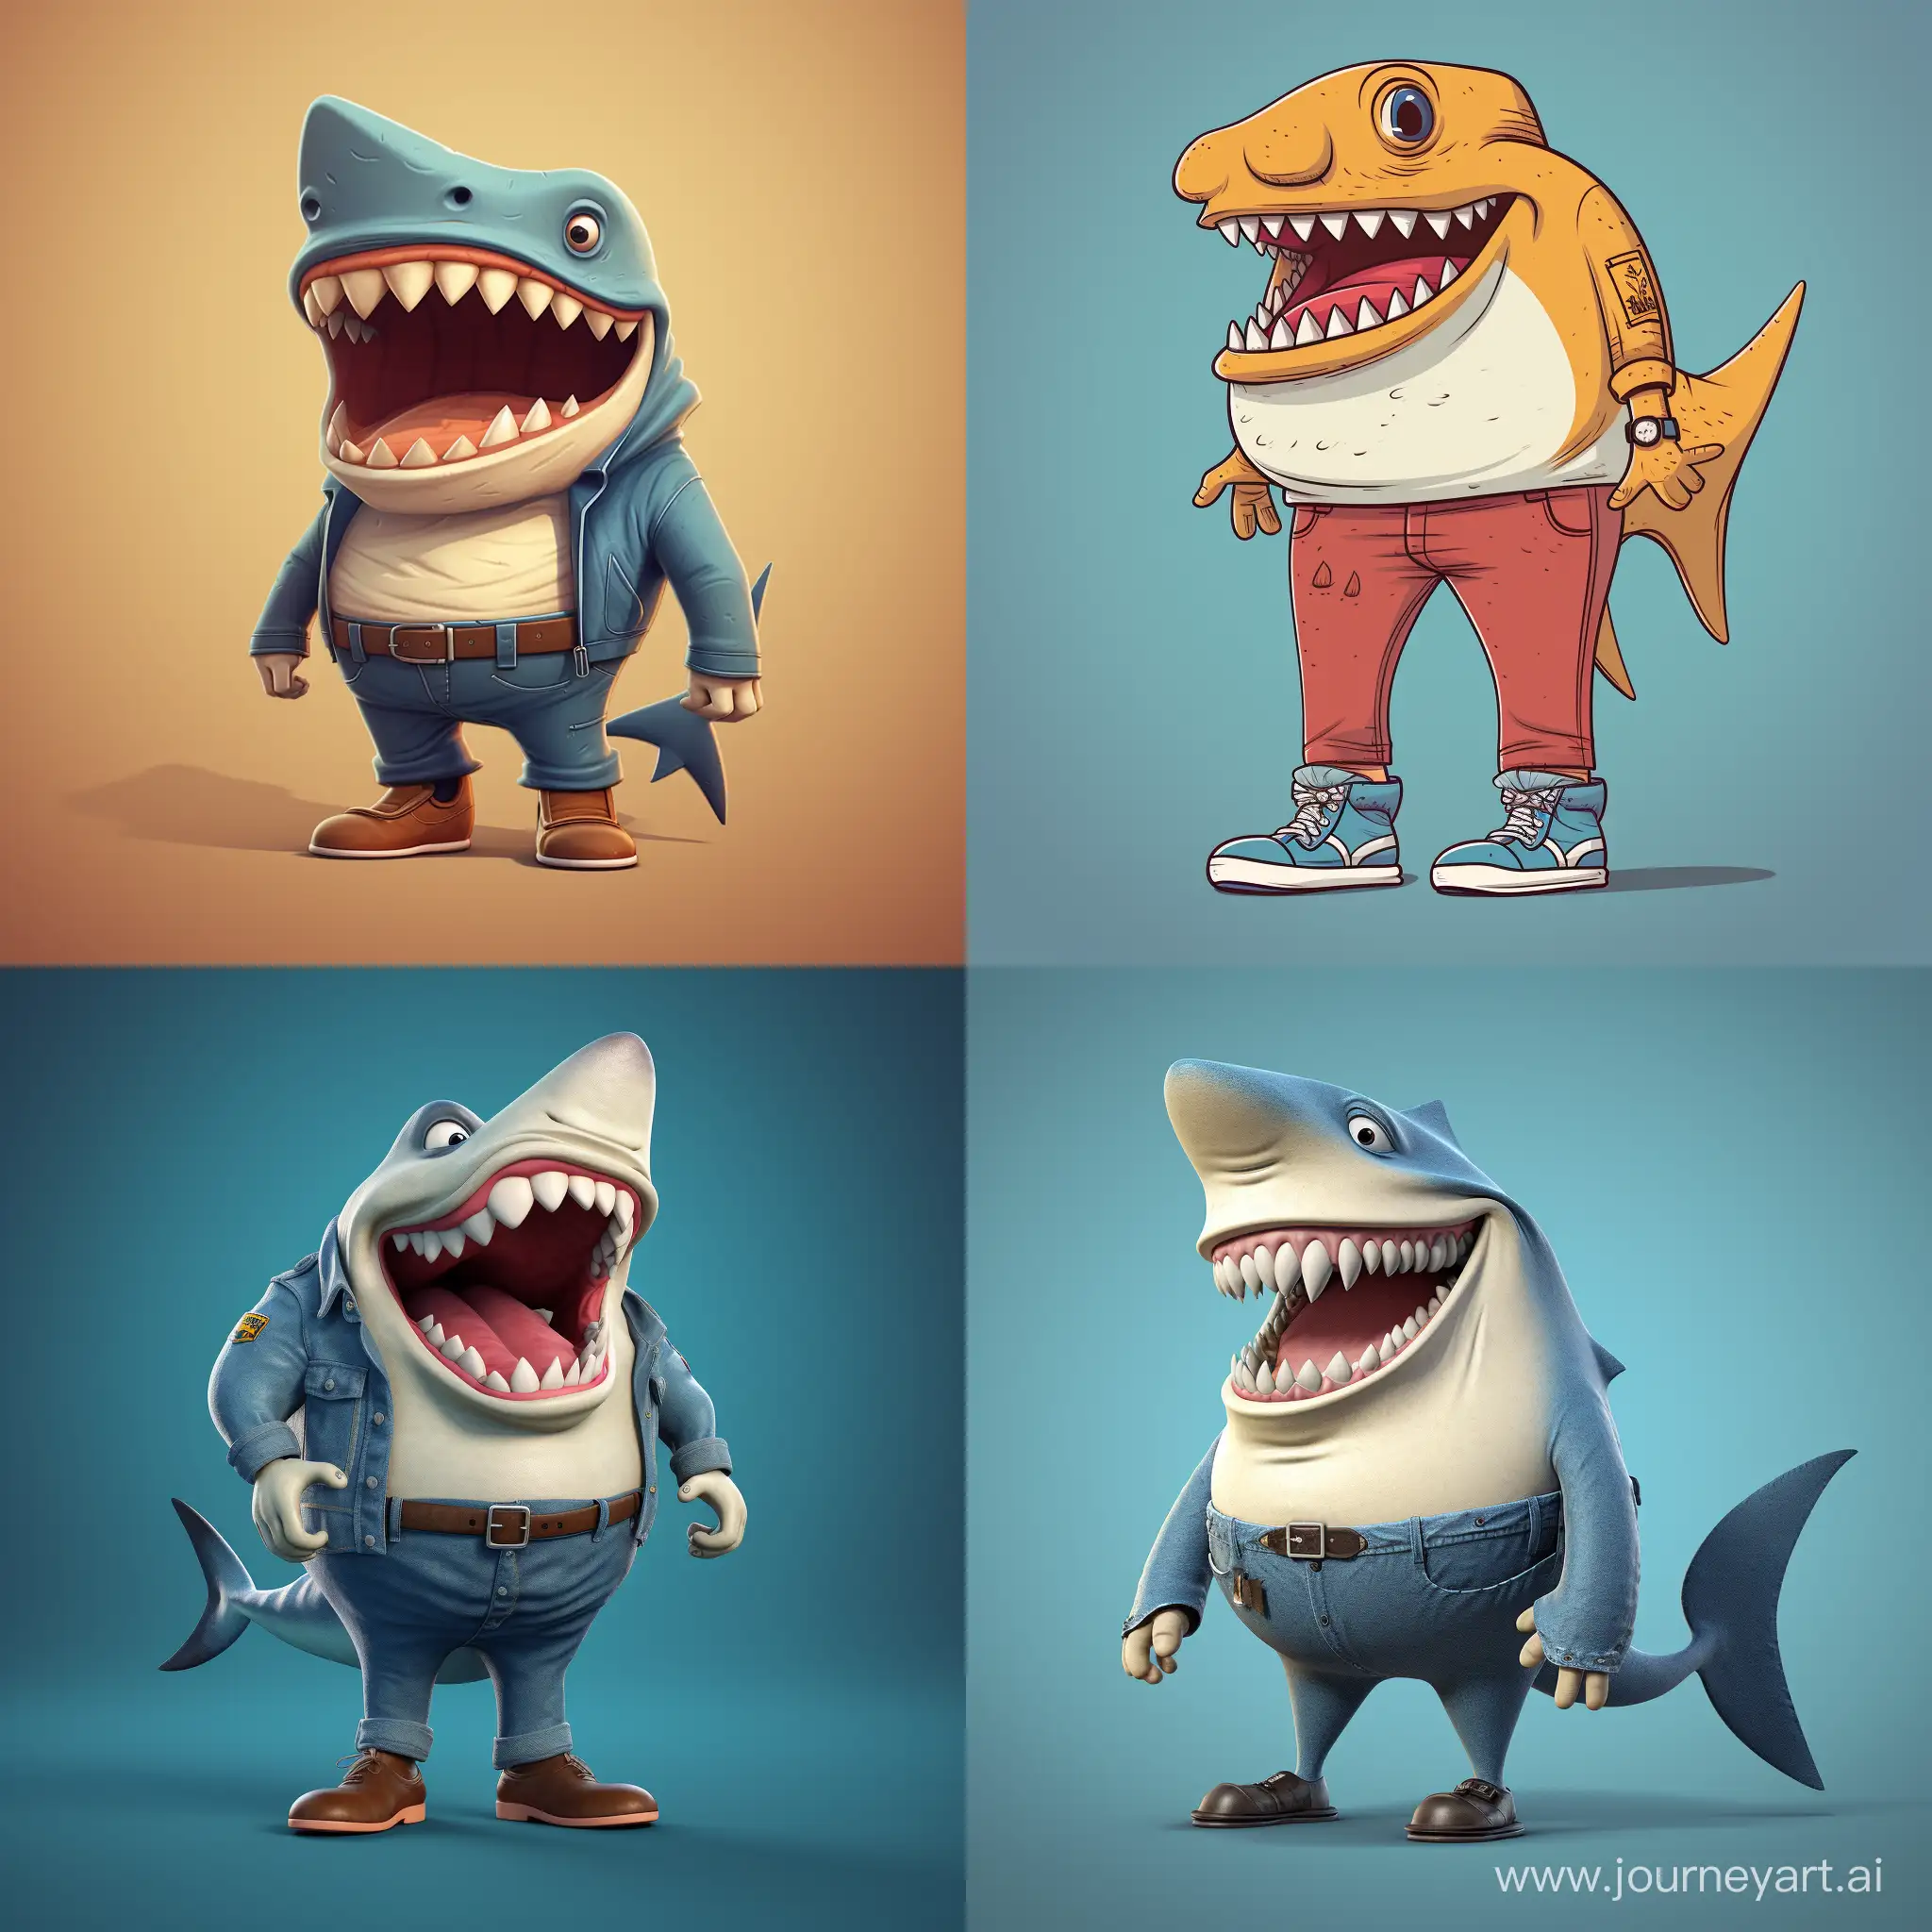 Joyful-Shark-Cartoon-Character-with-Human-Legs-Pants-and-Shoes